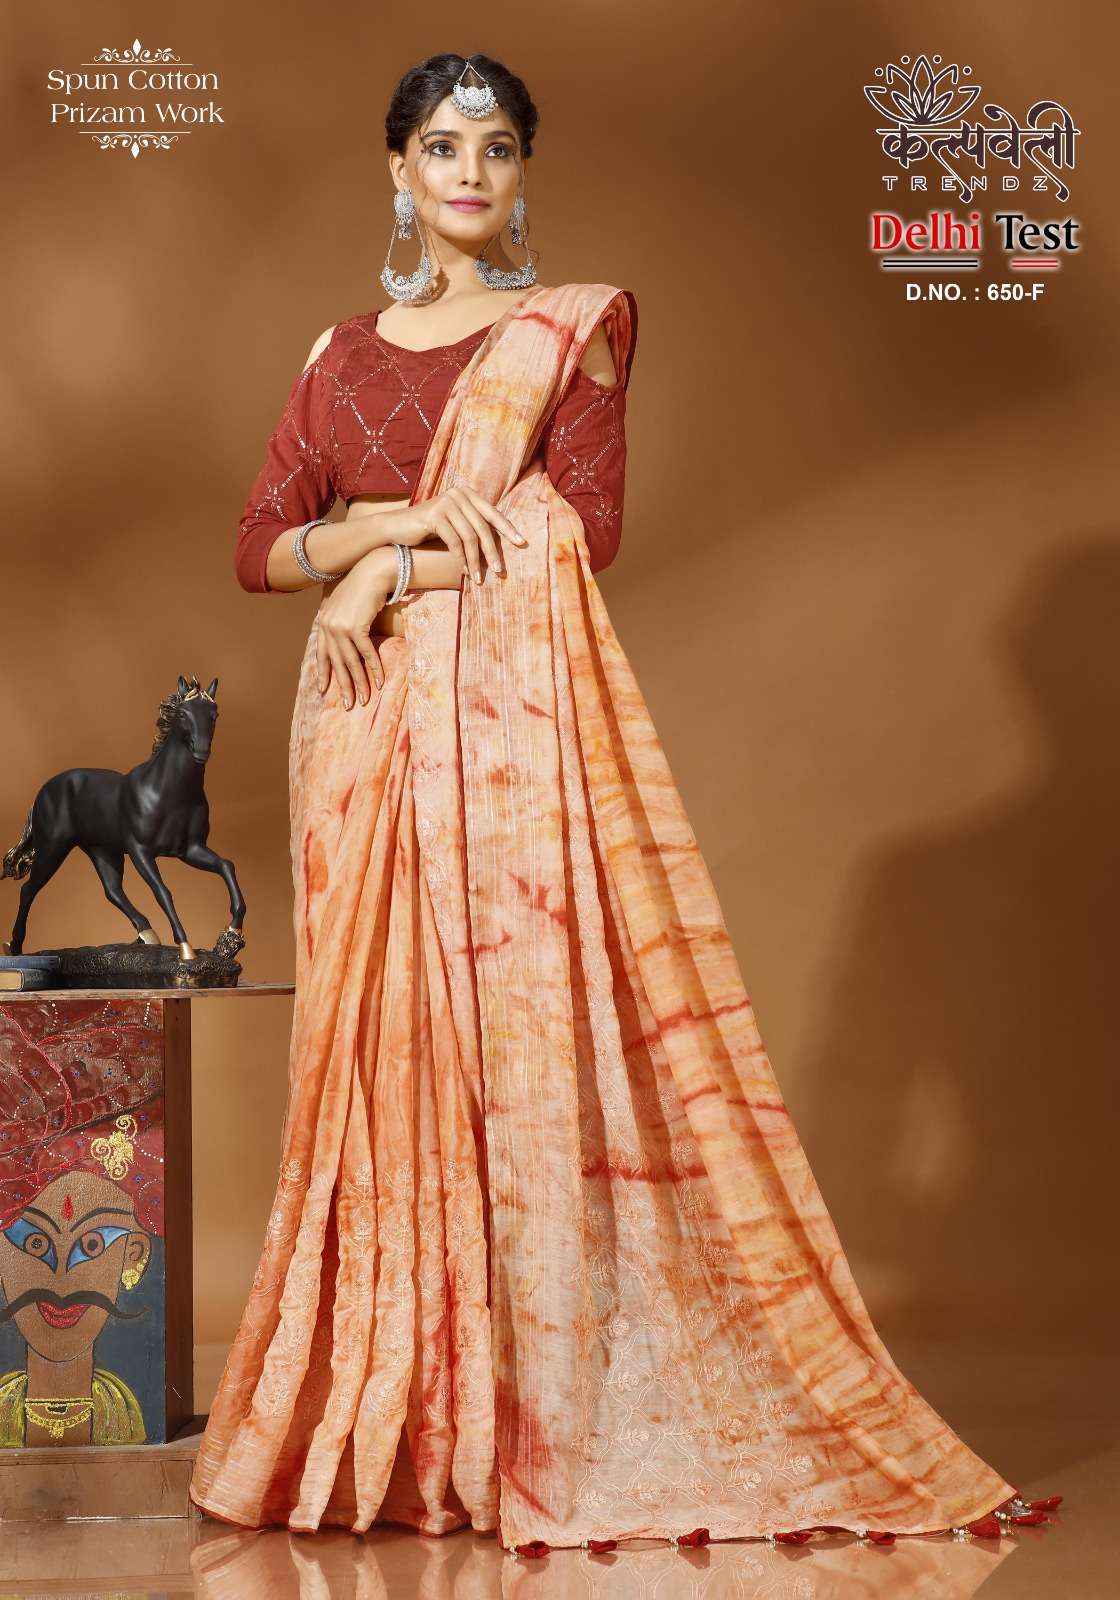 kalpavelly trendz delhi test 650 fancy spun cotton saree collection